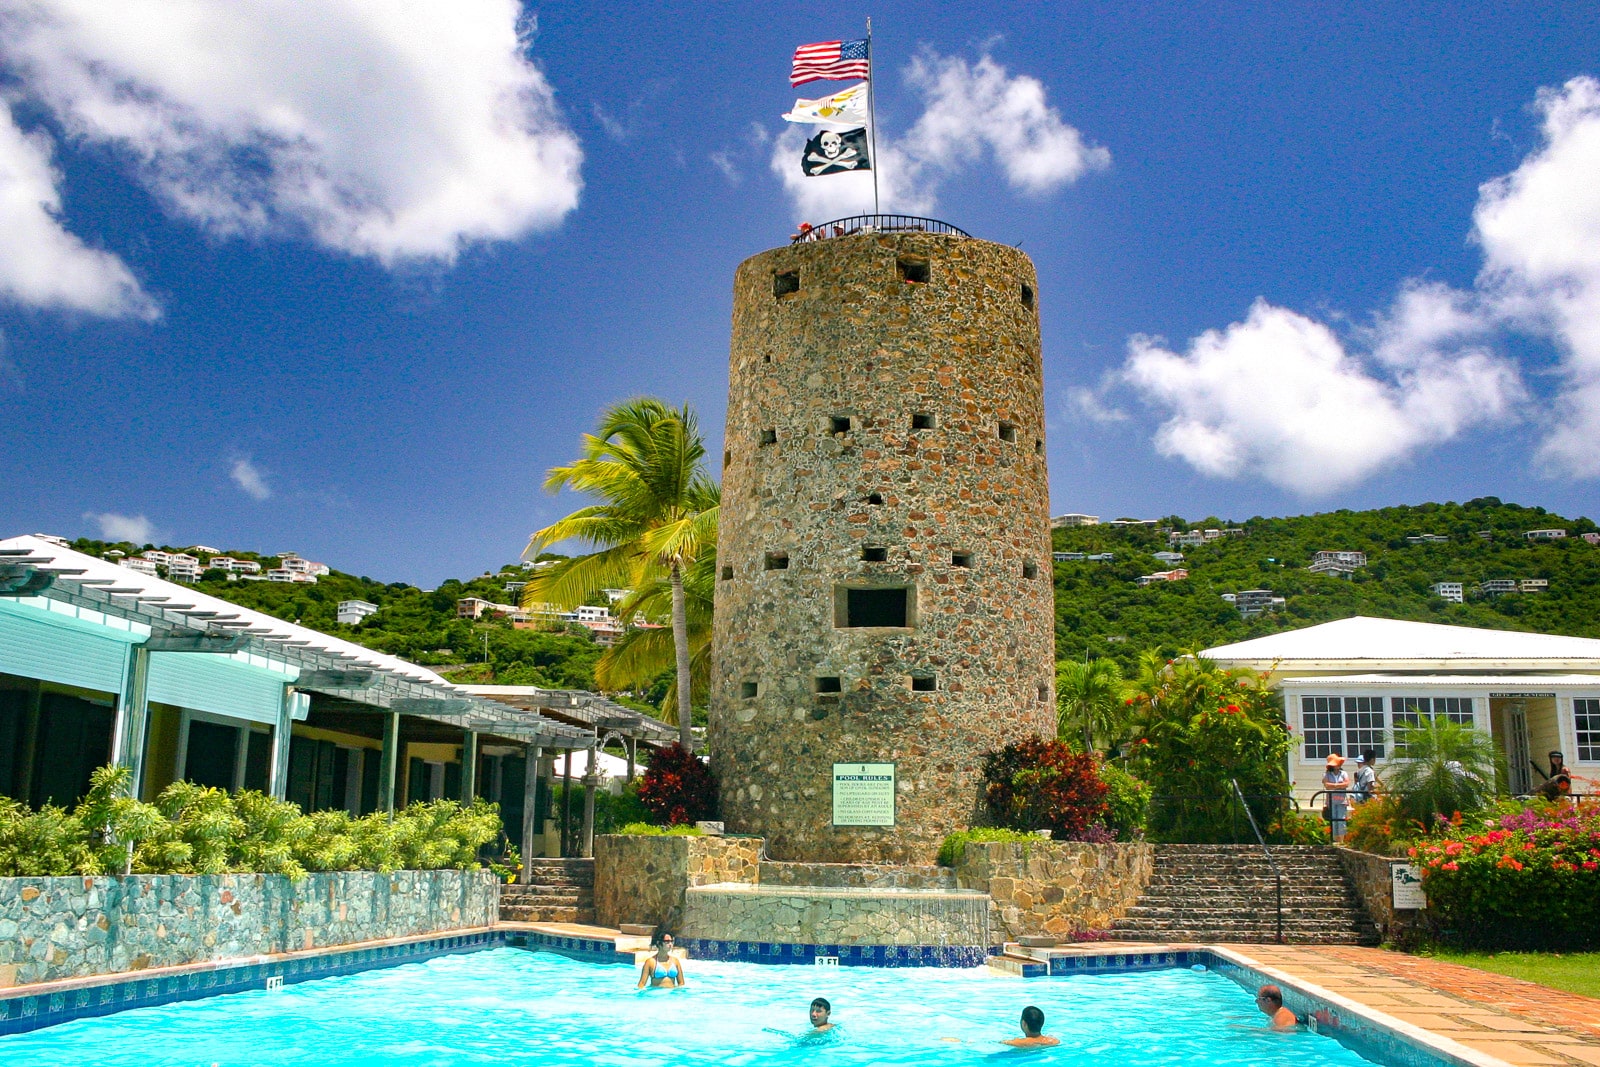 People swimming in pool in front of Blackbeards Castle in St. Thomas, US Virgin Islands.